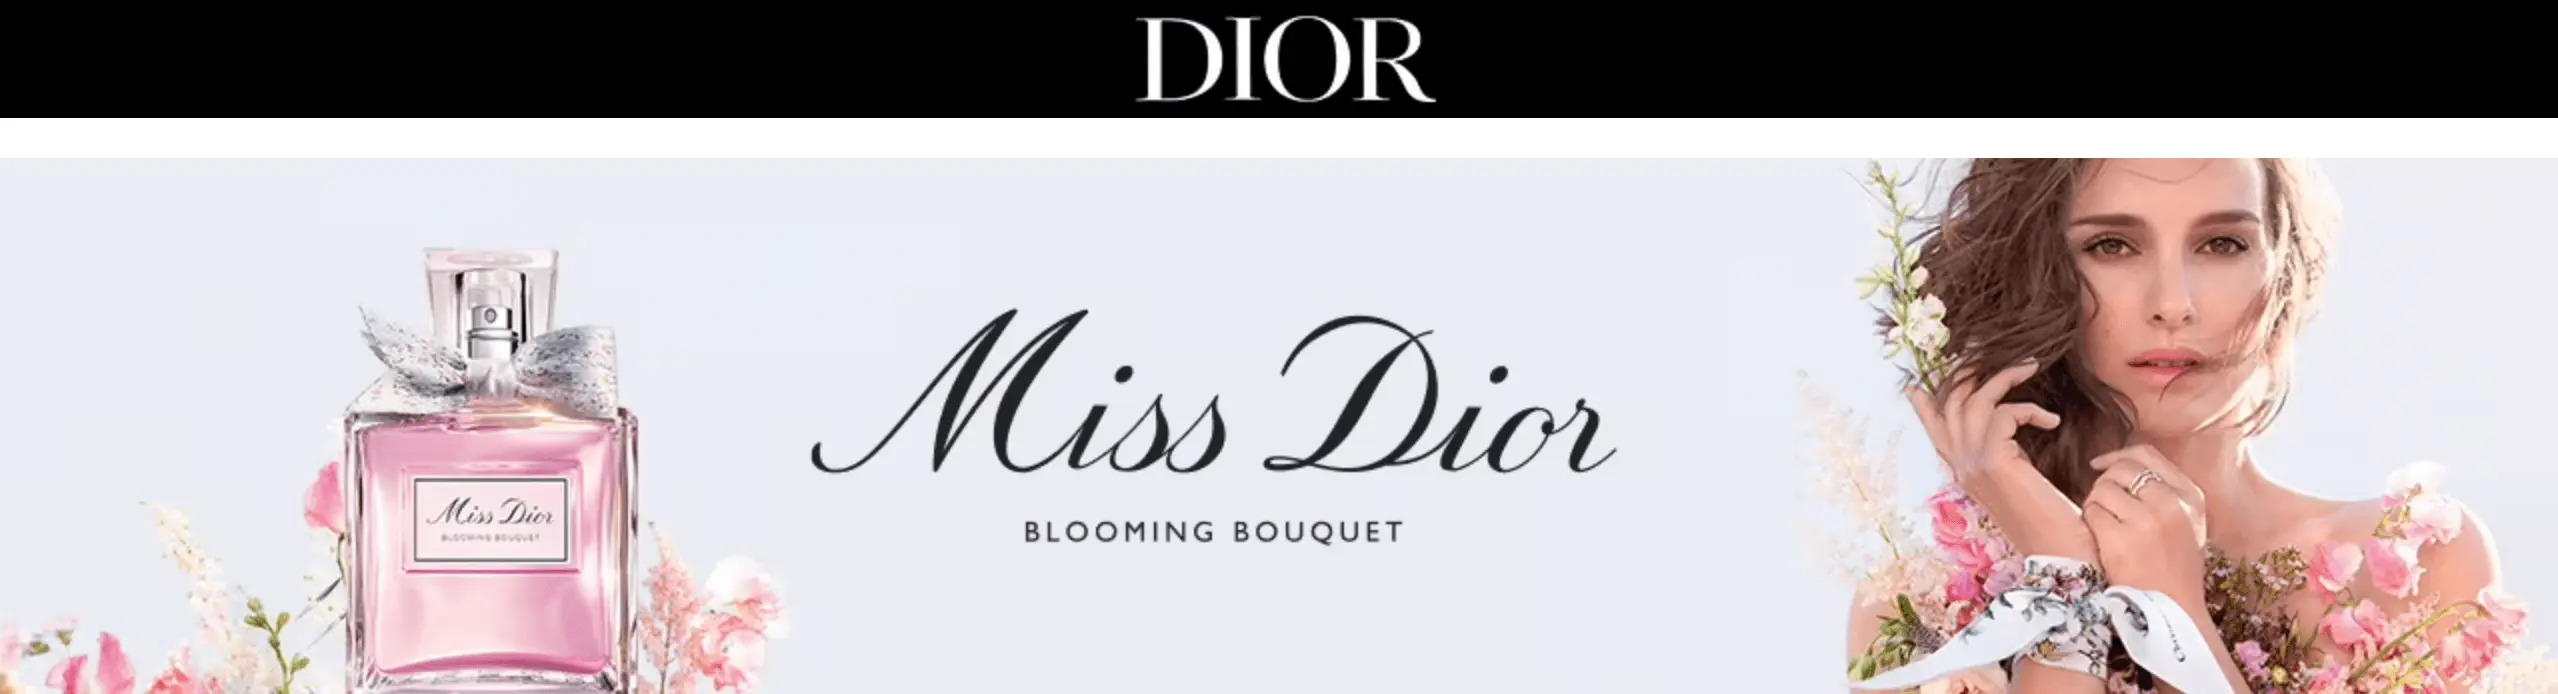 Dior-Blooming-Bouquet.jpg (191 KB)